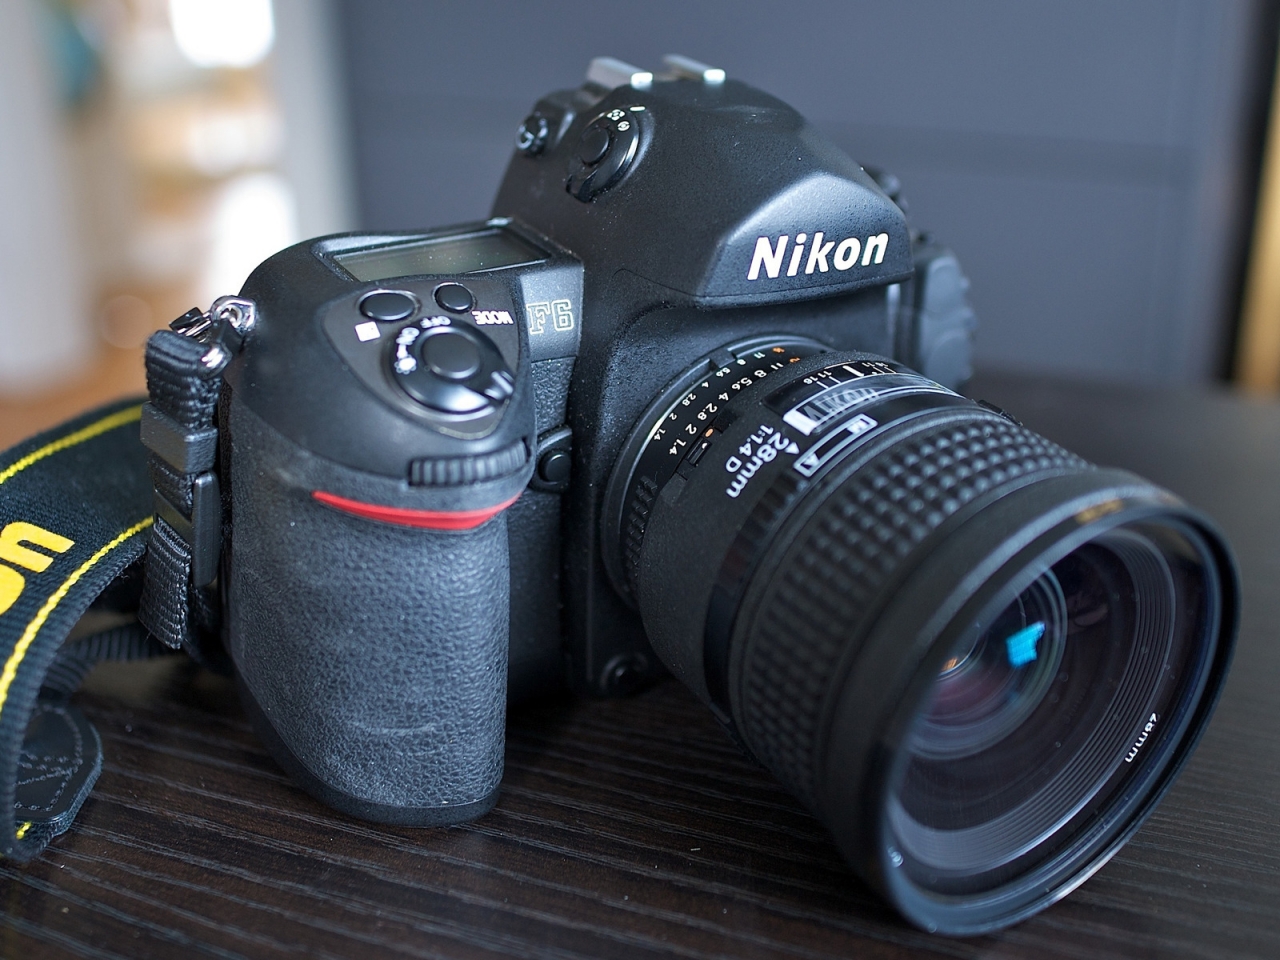 Nikon F6 for 1280 x 960 resolution